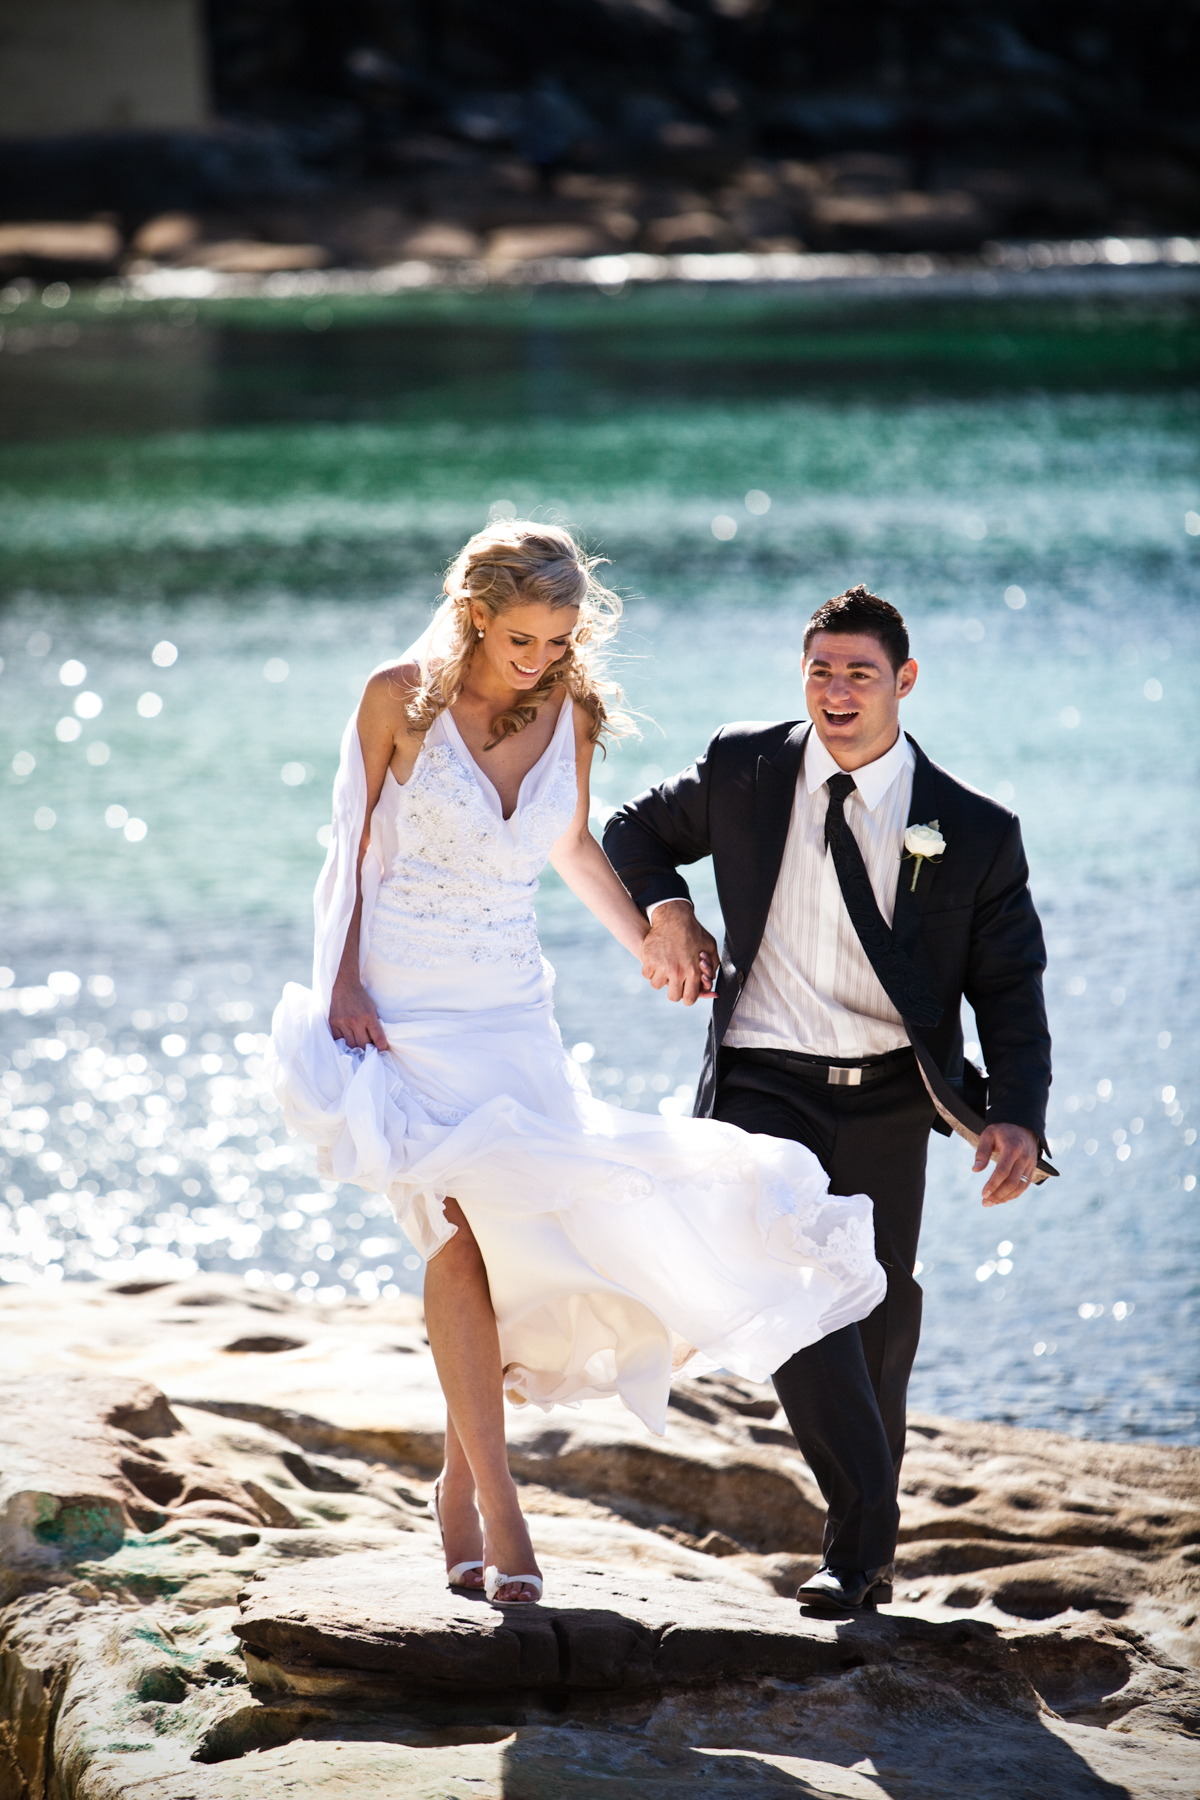 Wedding Photography - Professional Photographers gm photographics Sydneya